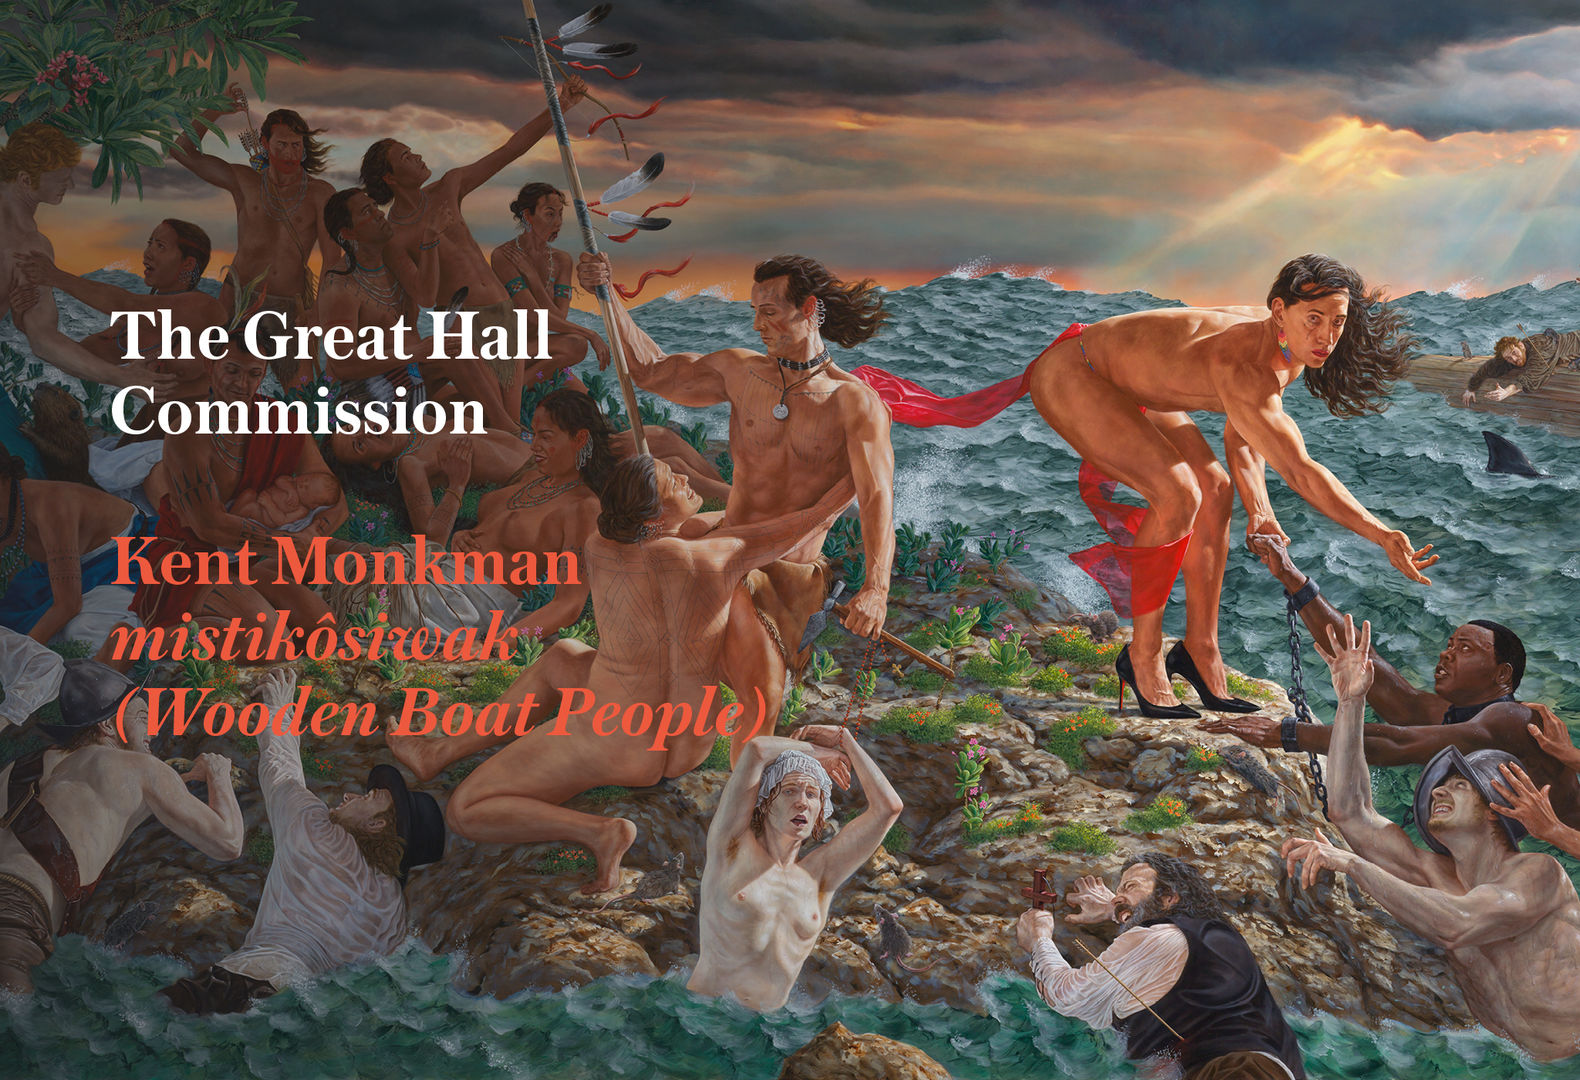 The Great Hall Commission Kent Monkman, mistikôsiwak (Wooden Boat People) The Metropolitan Museum of